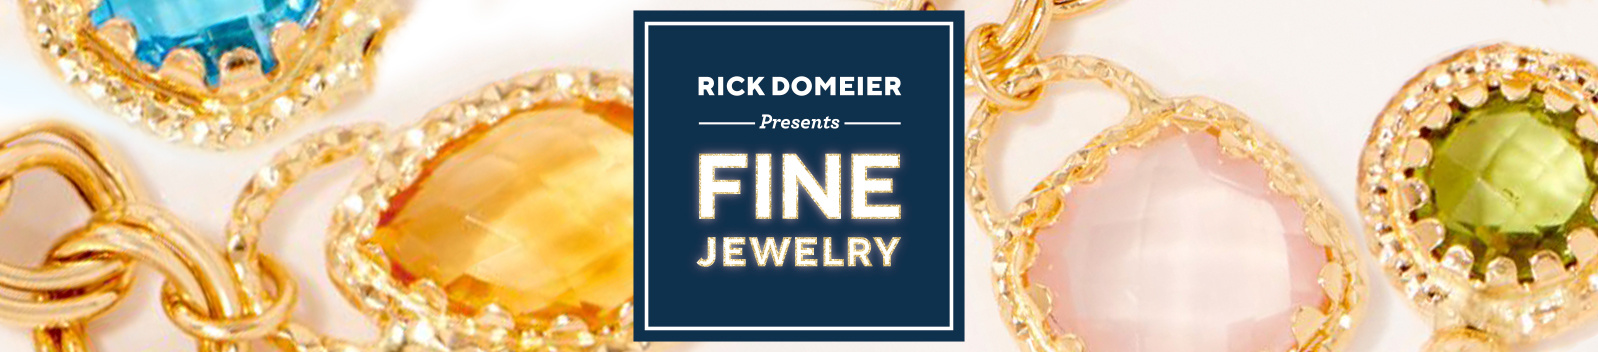 Rick Domeier Presents Fine Jewelry